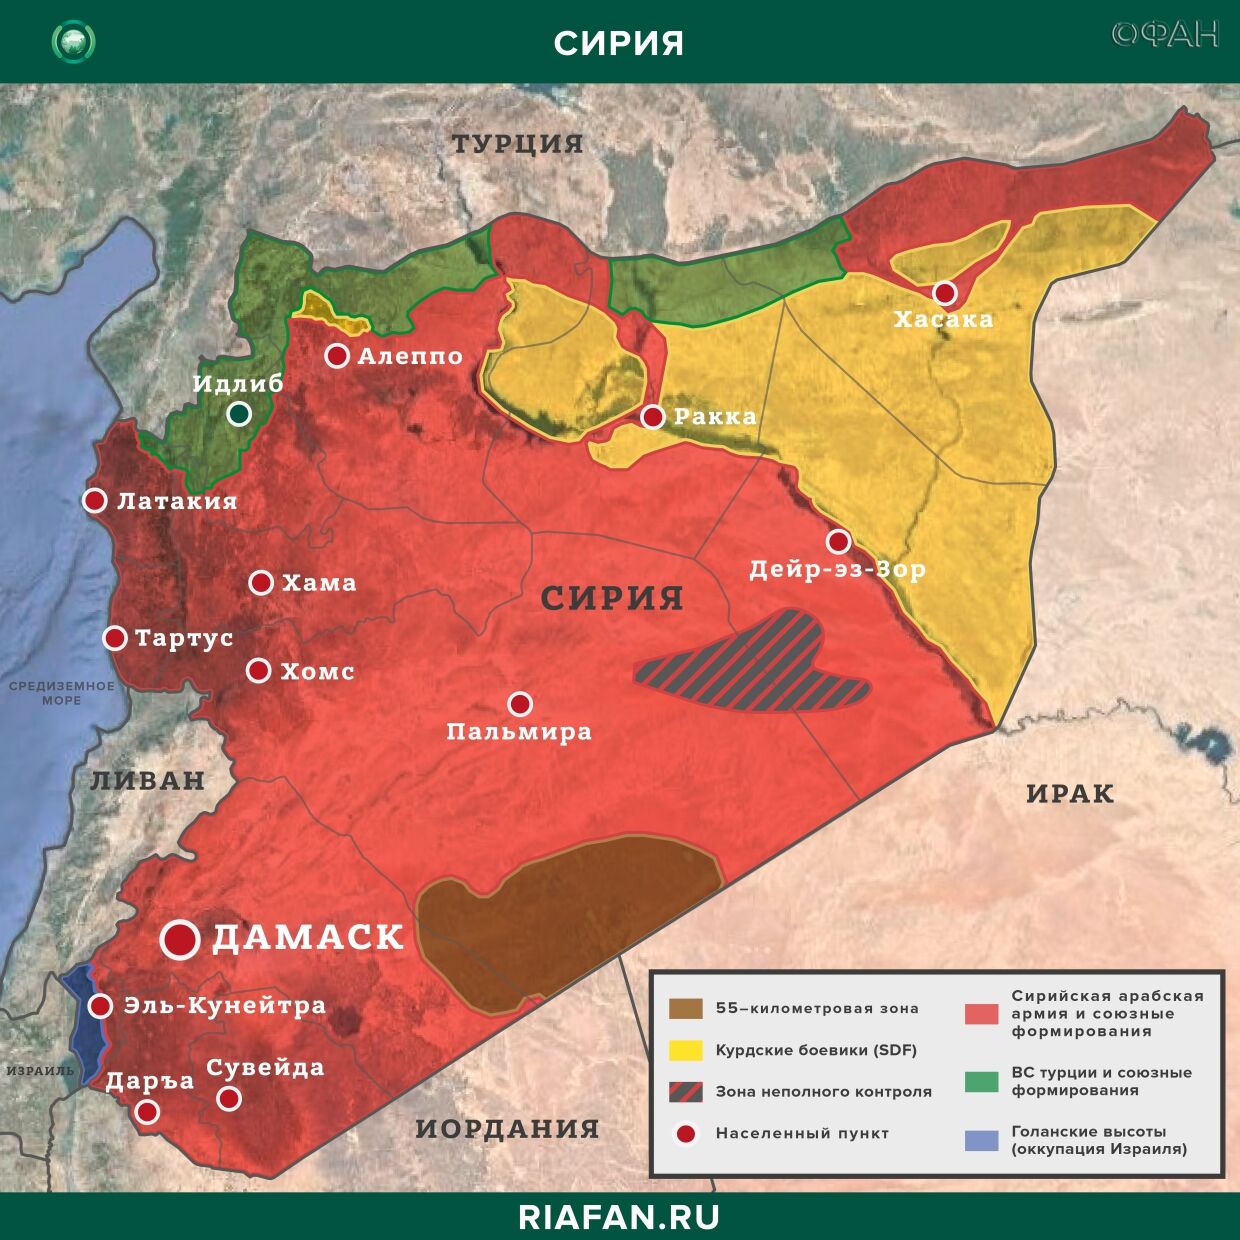 叙利亚每日结果 26 四月 06.00: США создают группировку для удержания контроля над нефтью, атака на штаб ХТШ в Идлибе